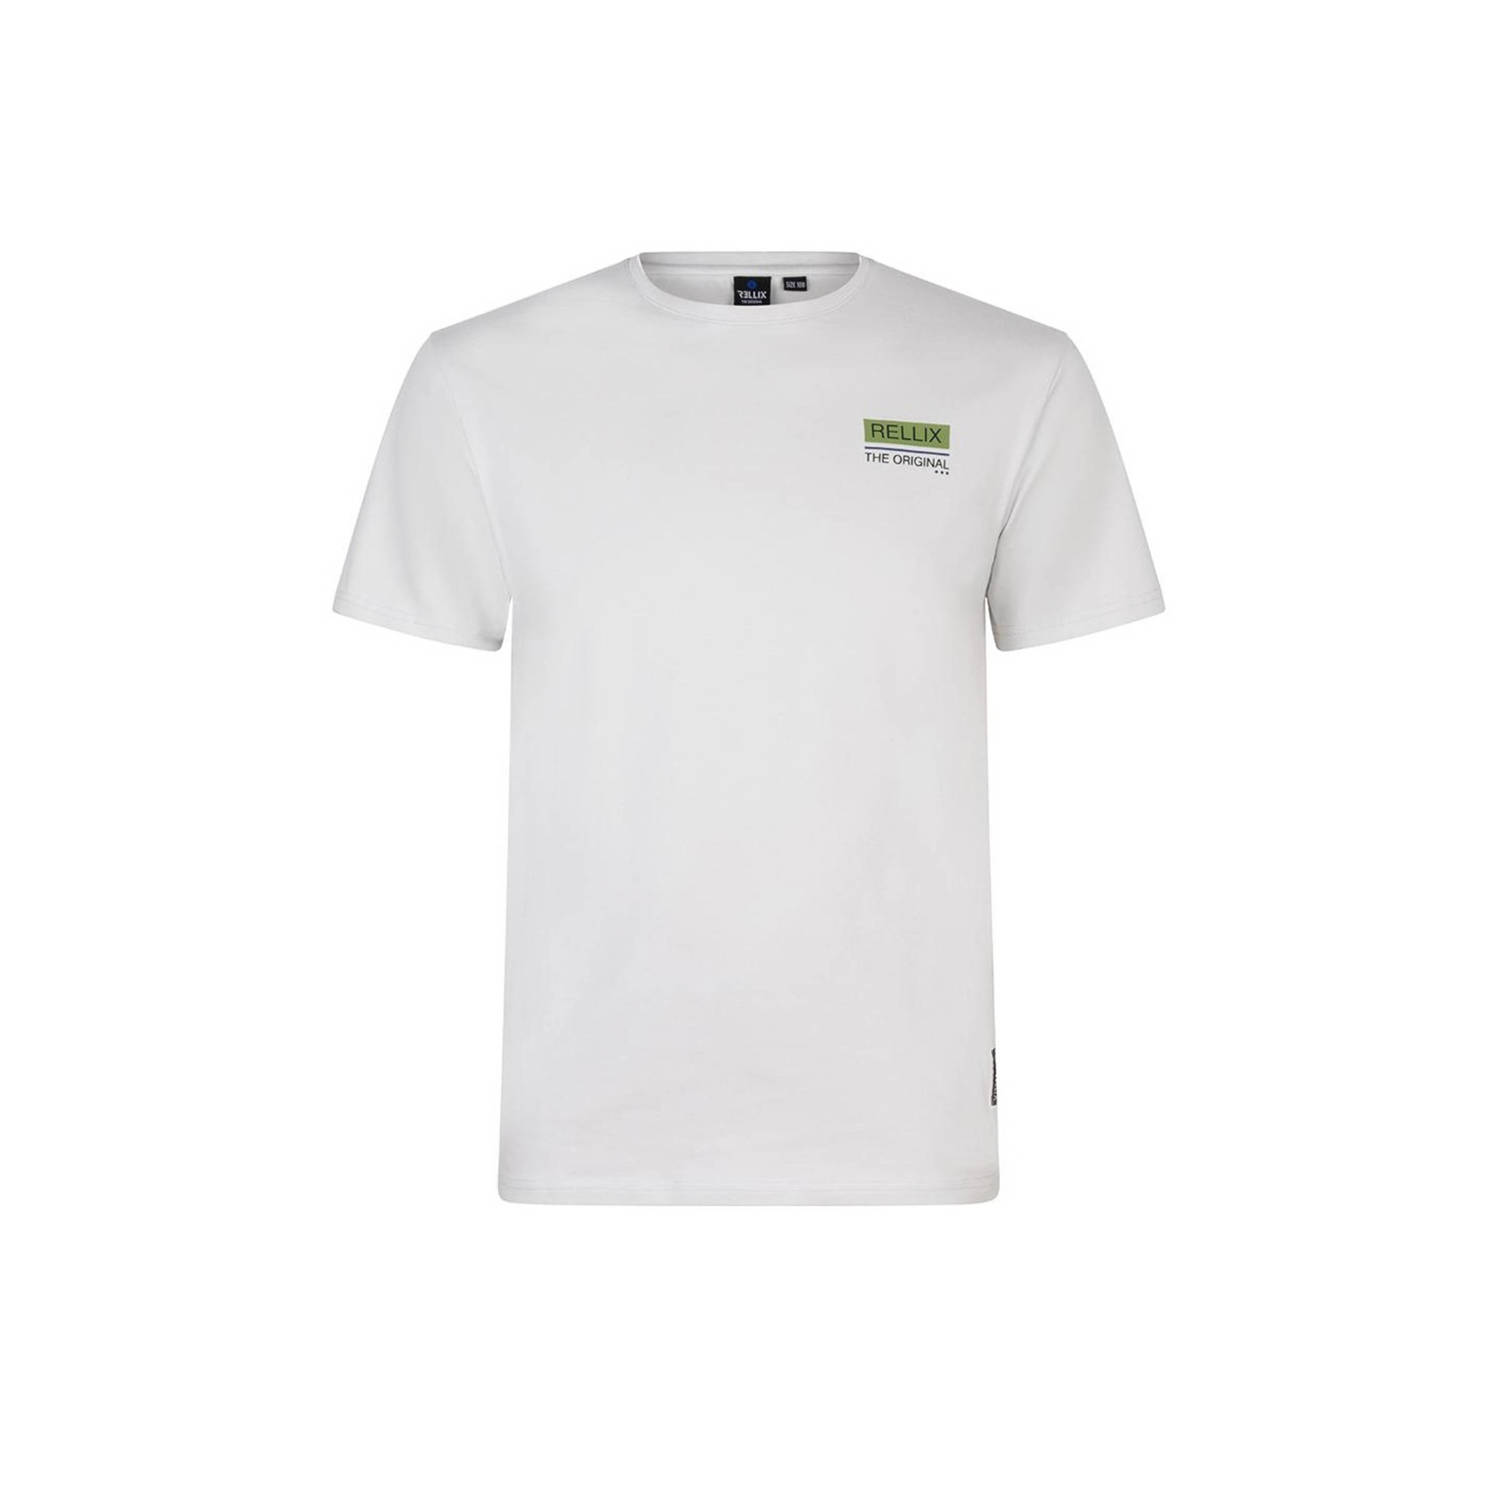 Rellix T-shirt met backprint offwhite